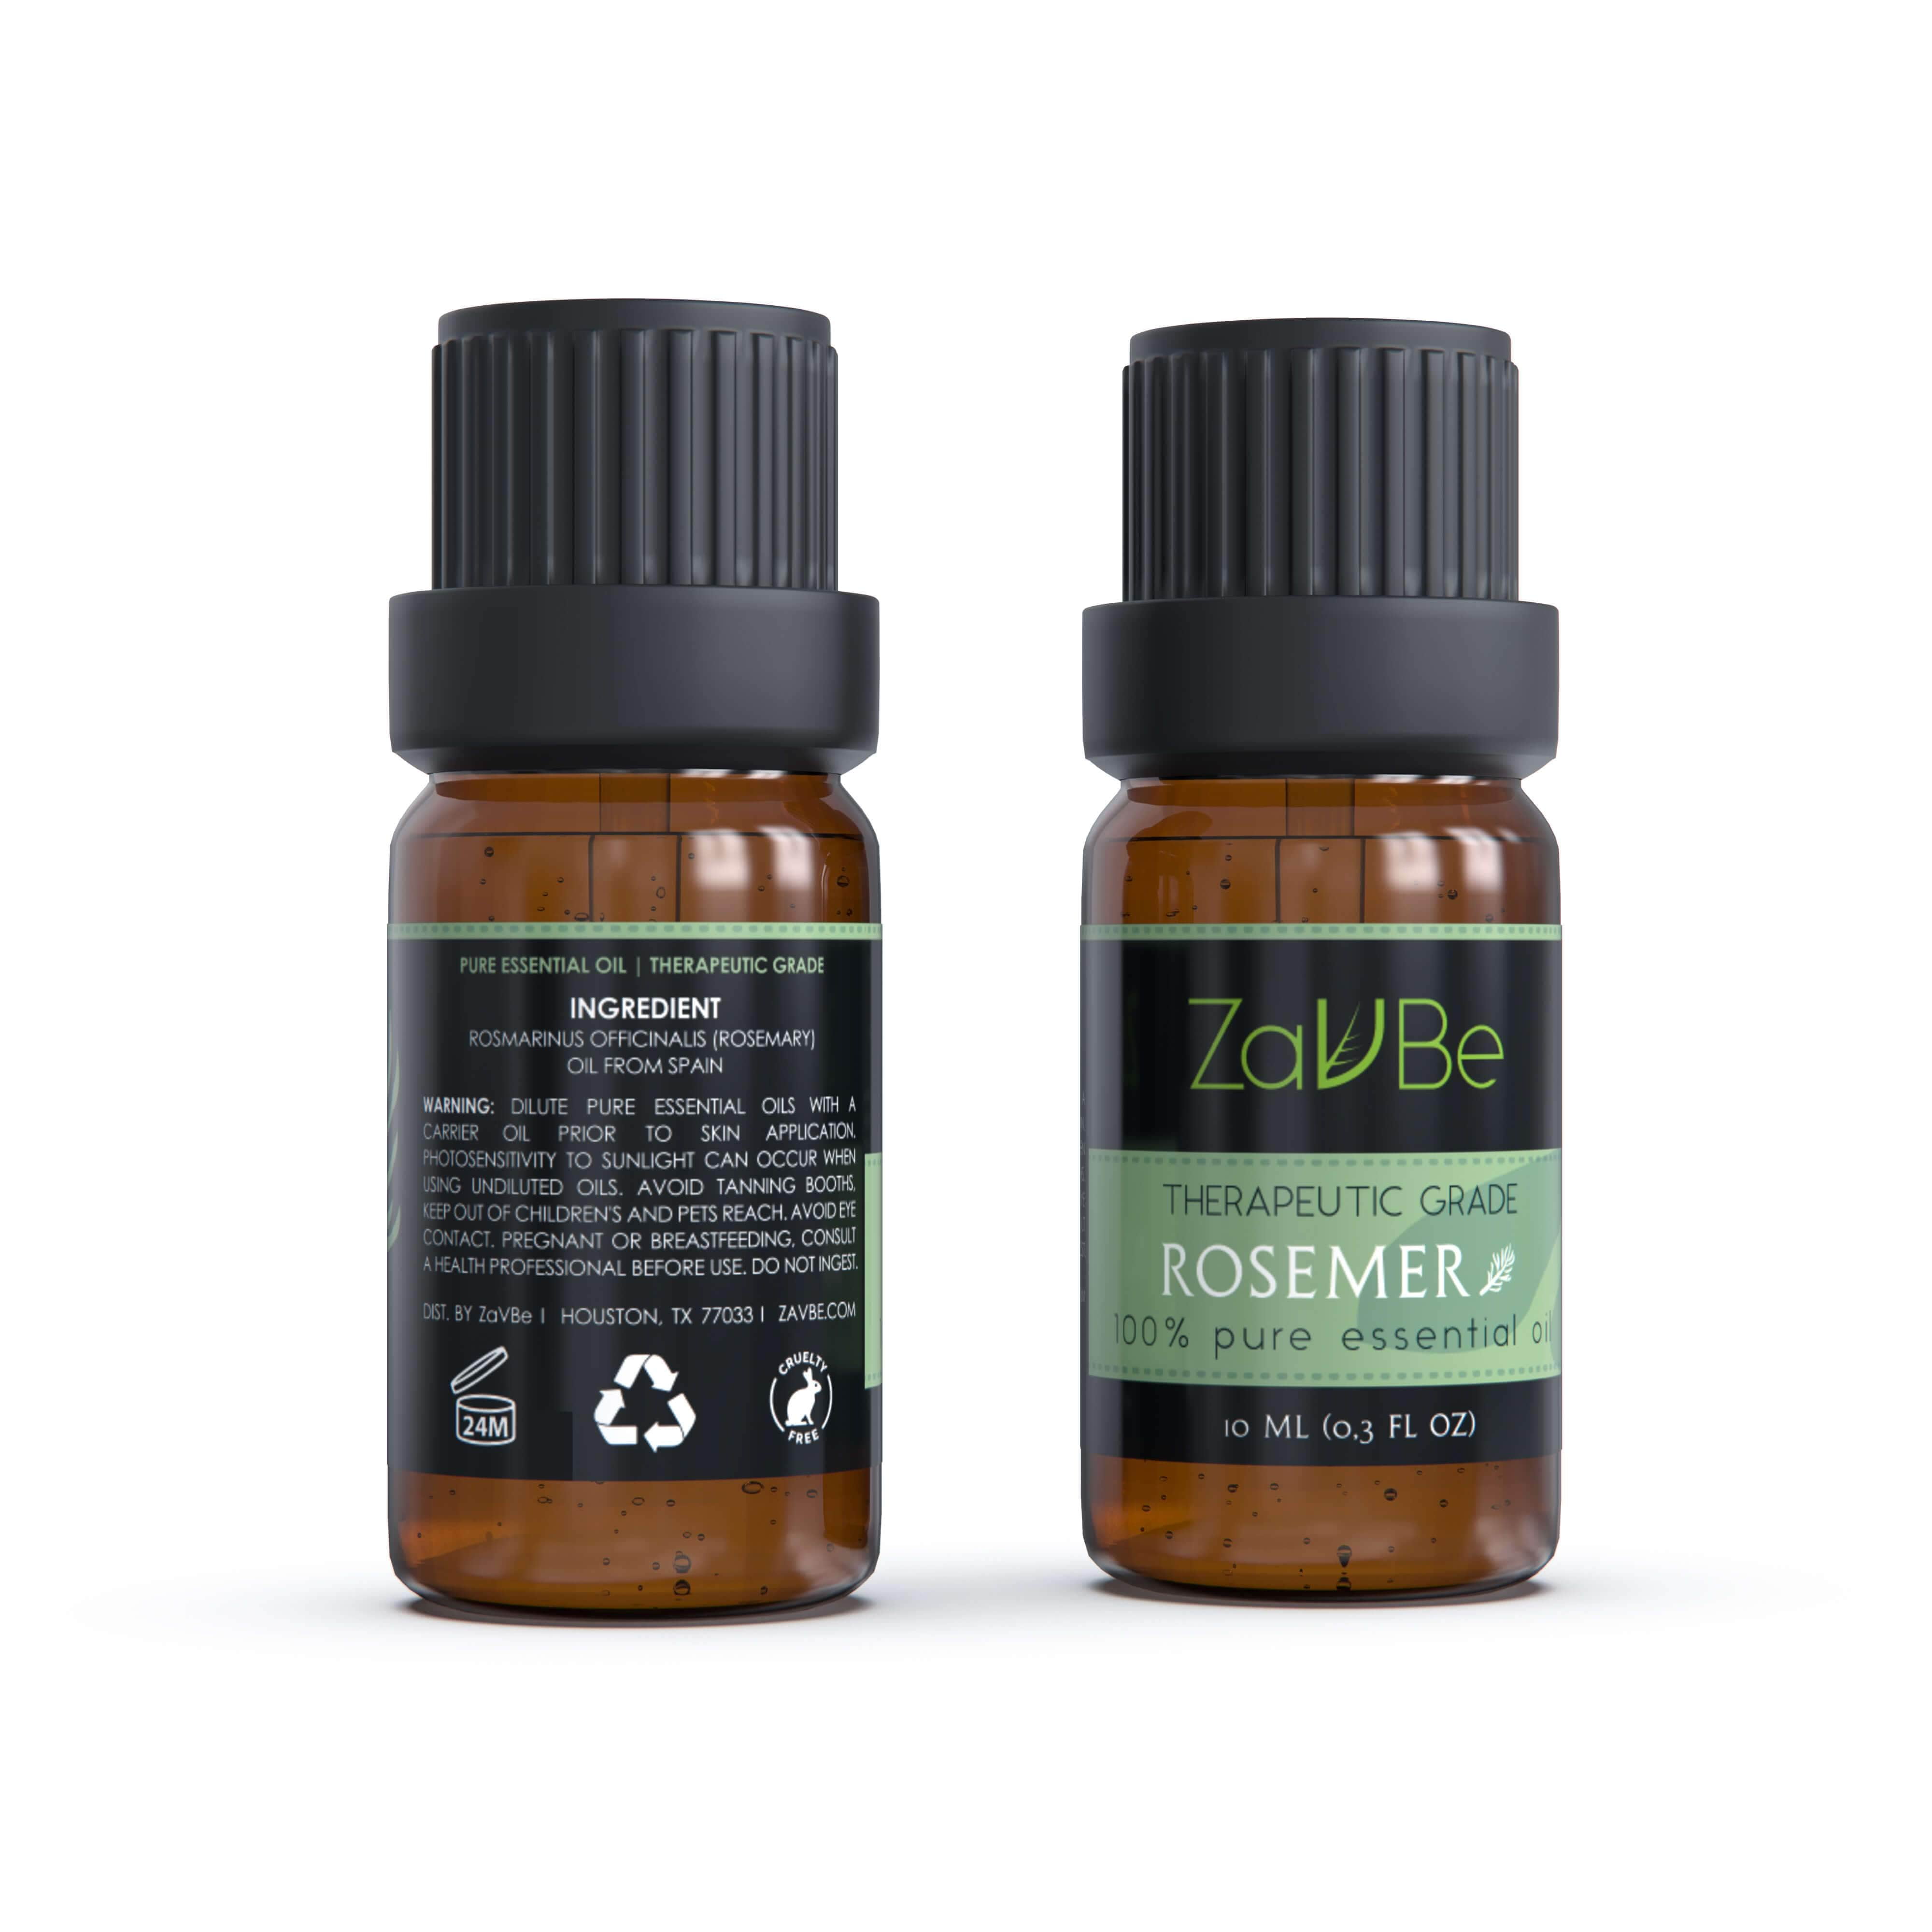 Sun Essential Oils 4oz - Peppermint Essential Oil - 4 Fluid Ounces